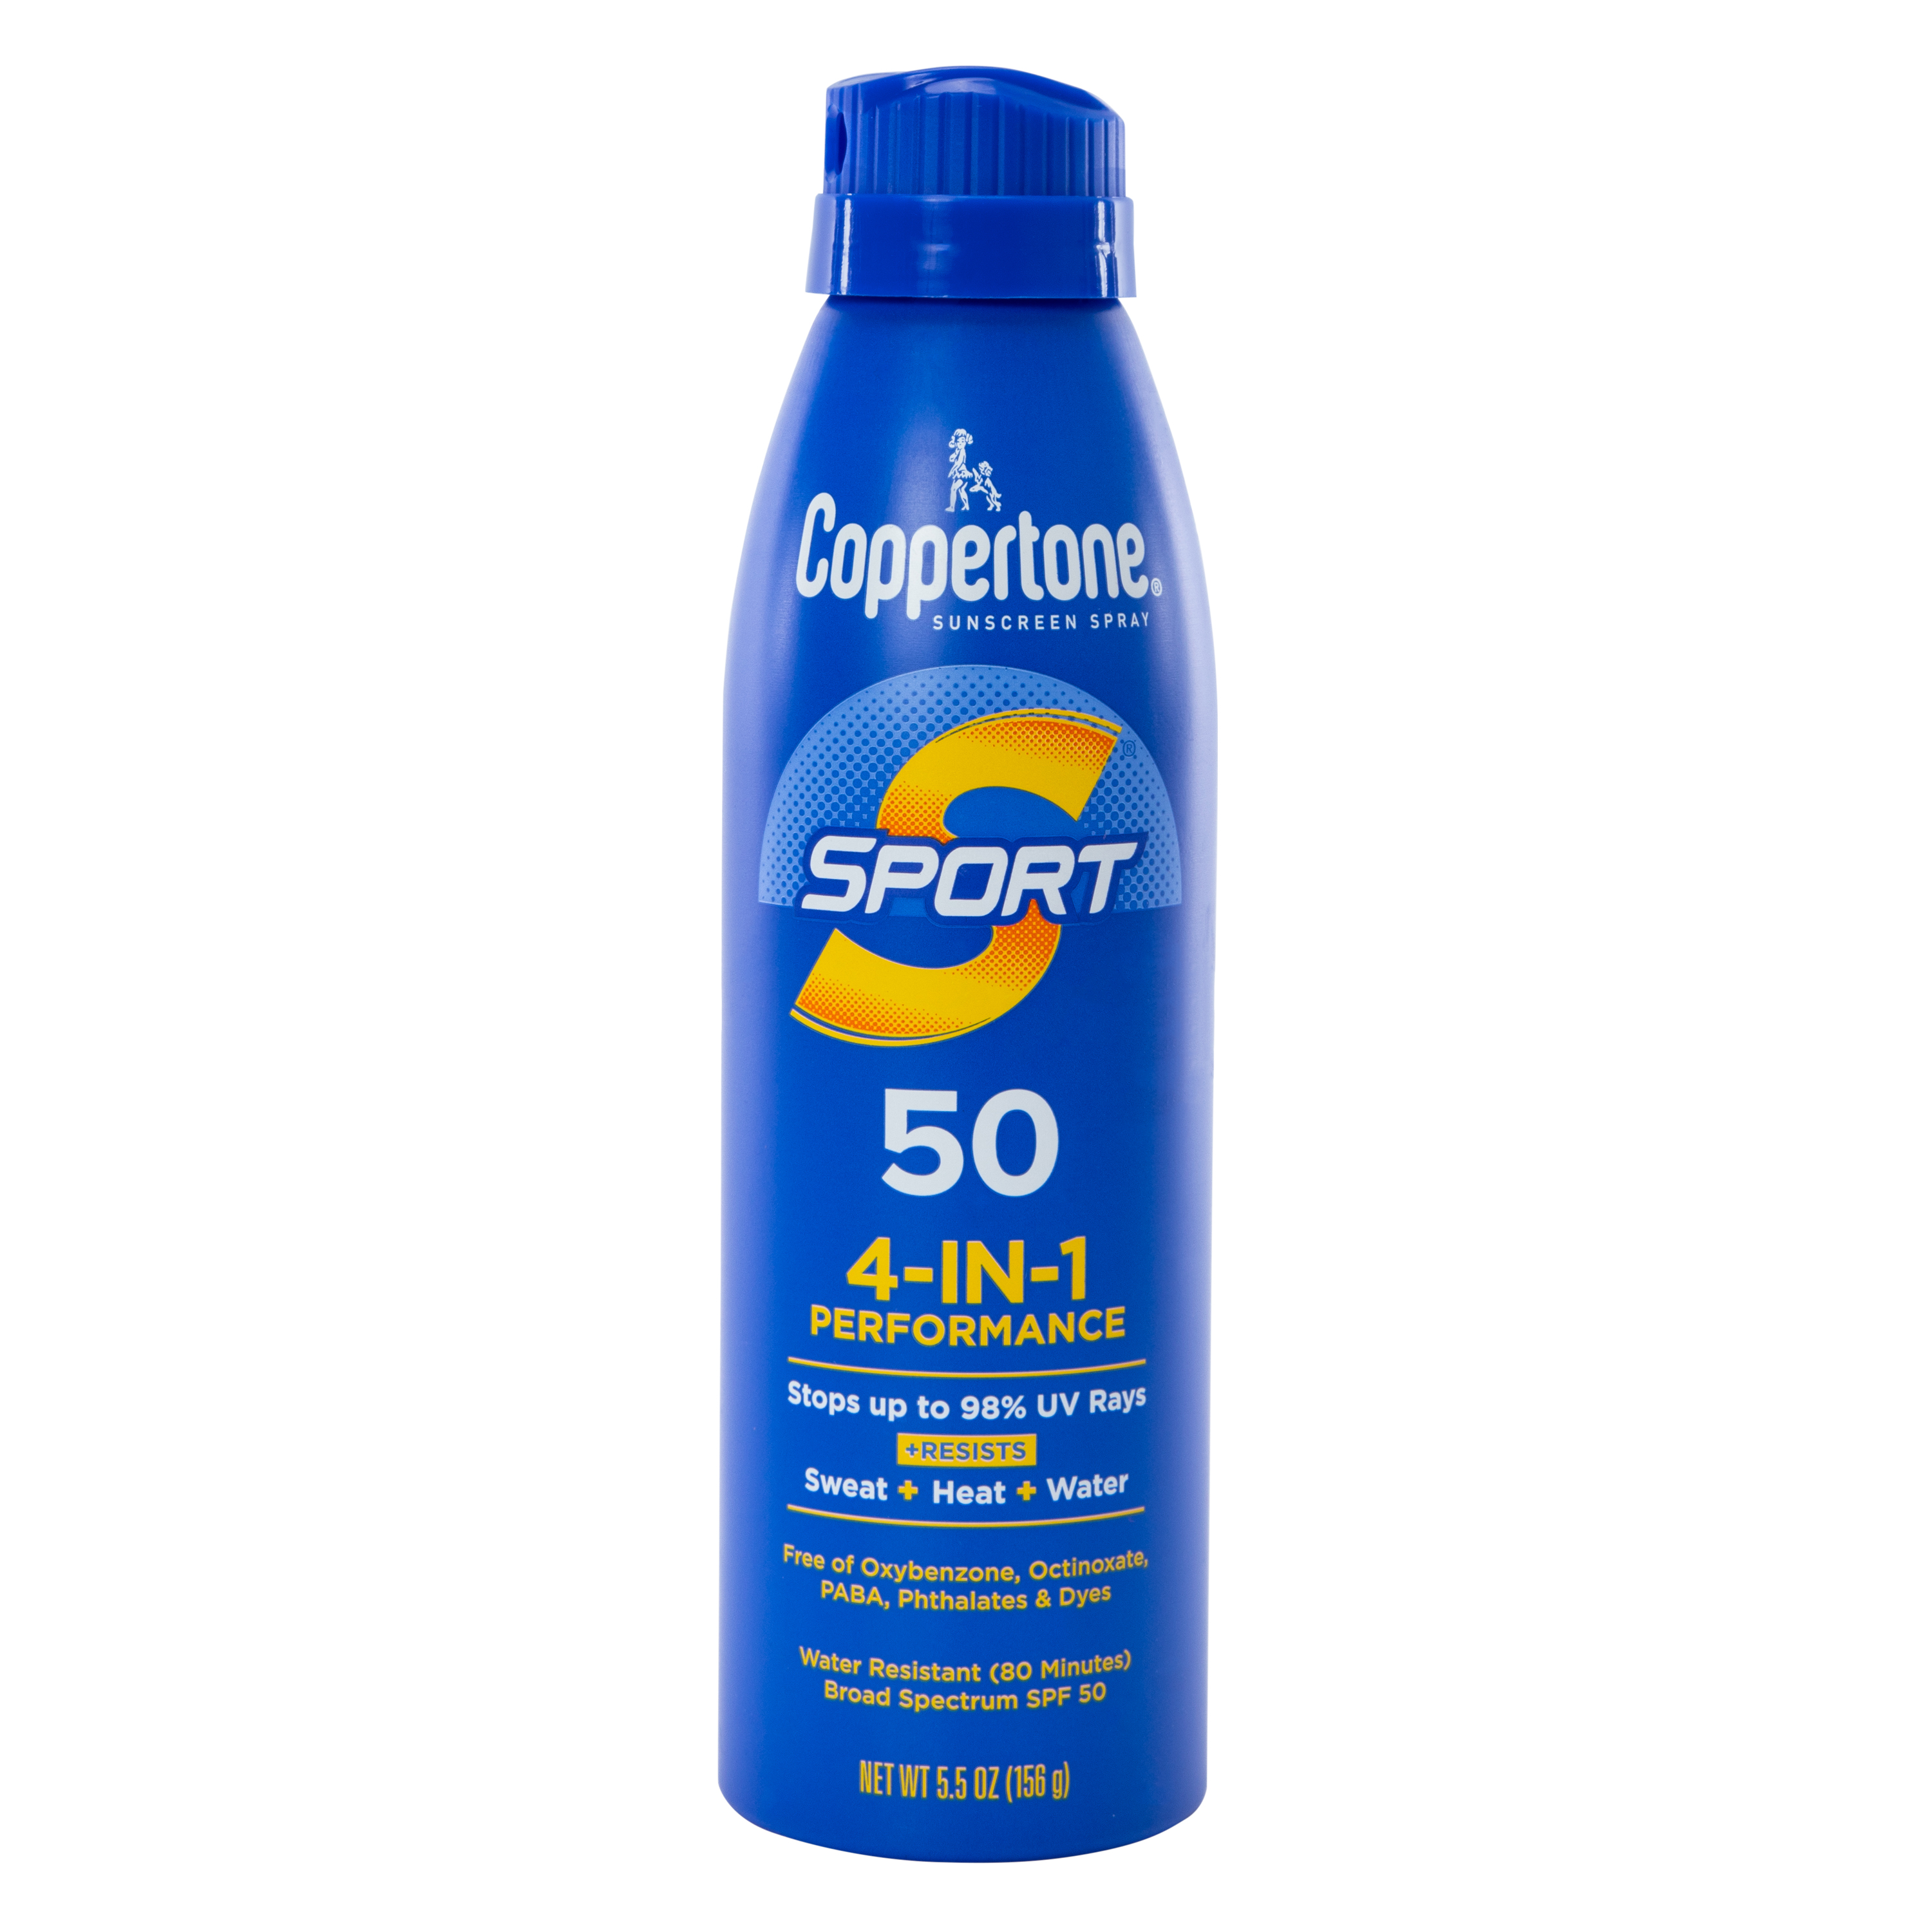 Coppertone® SPF 50 Sport Sunscreen Spray 5.5oz